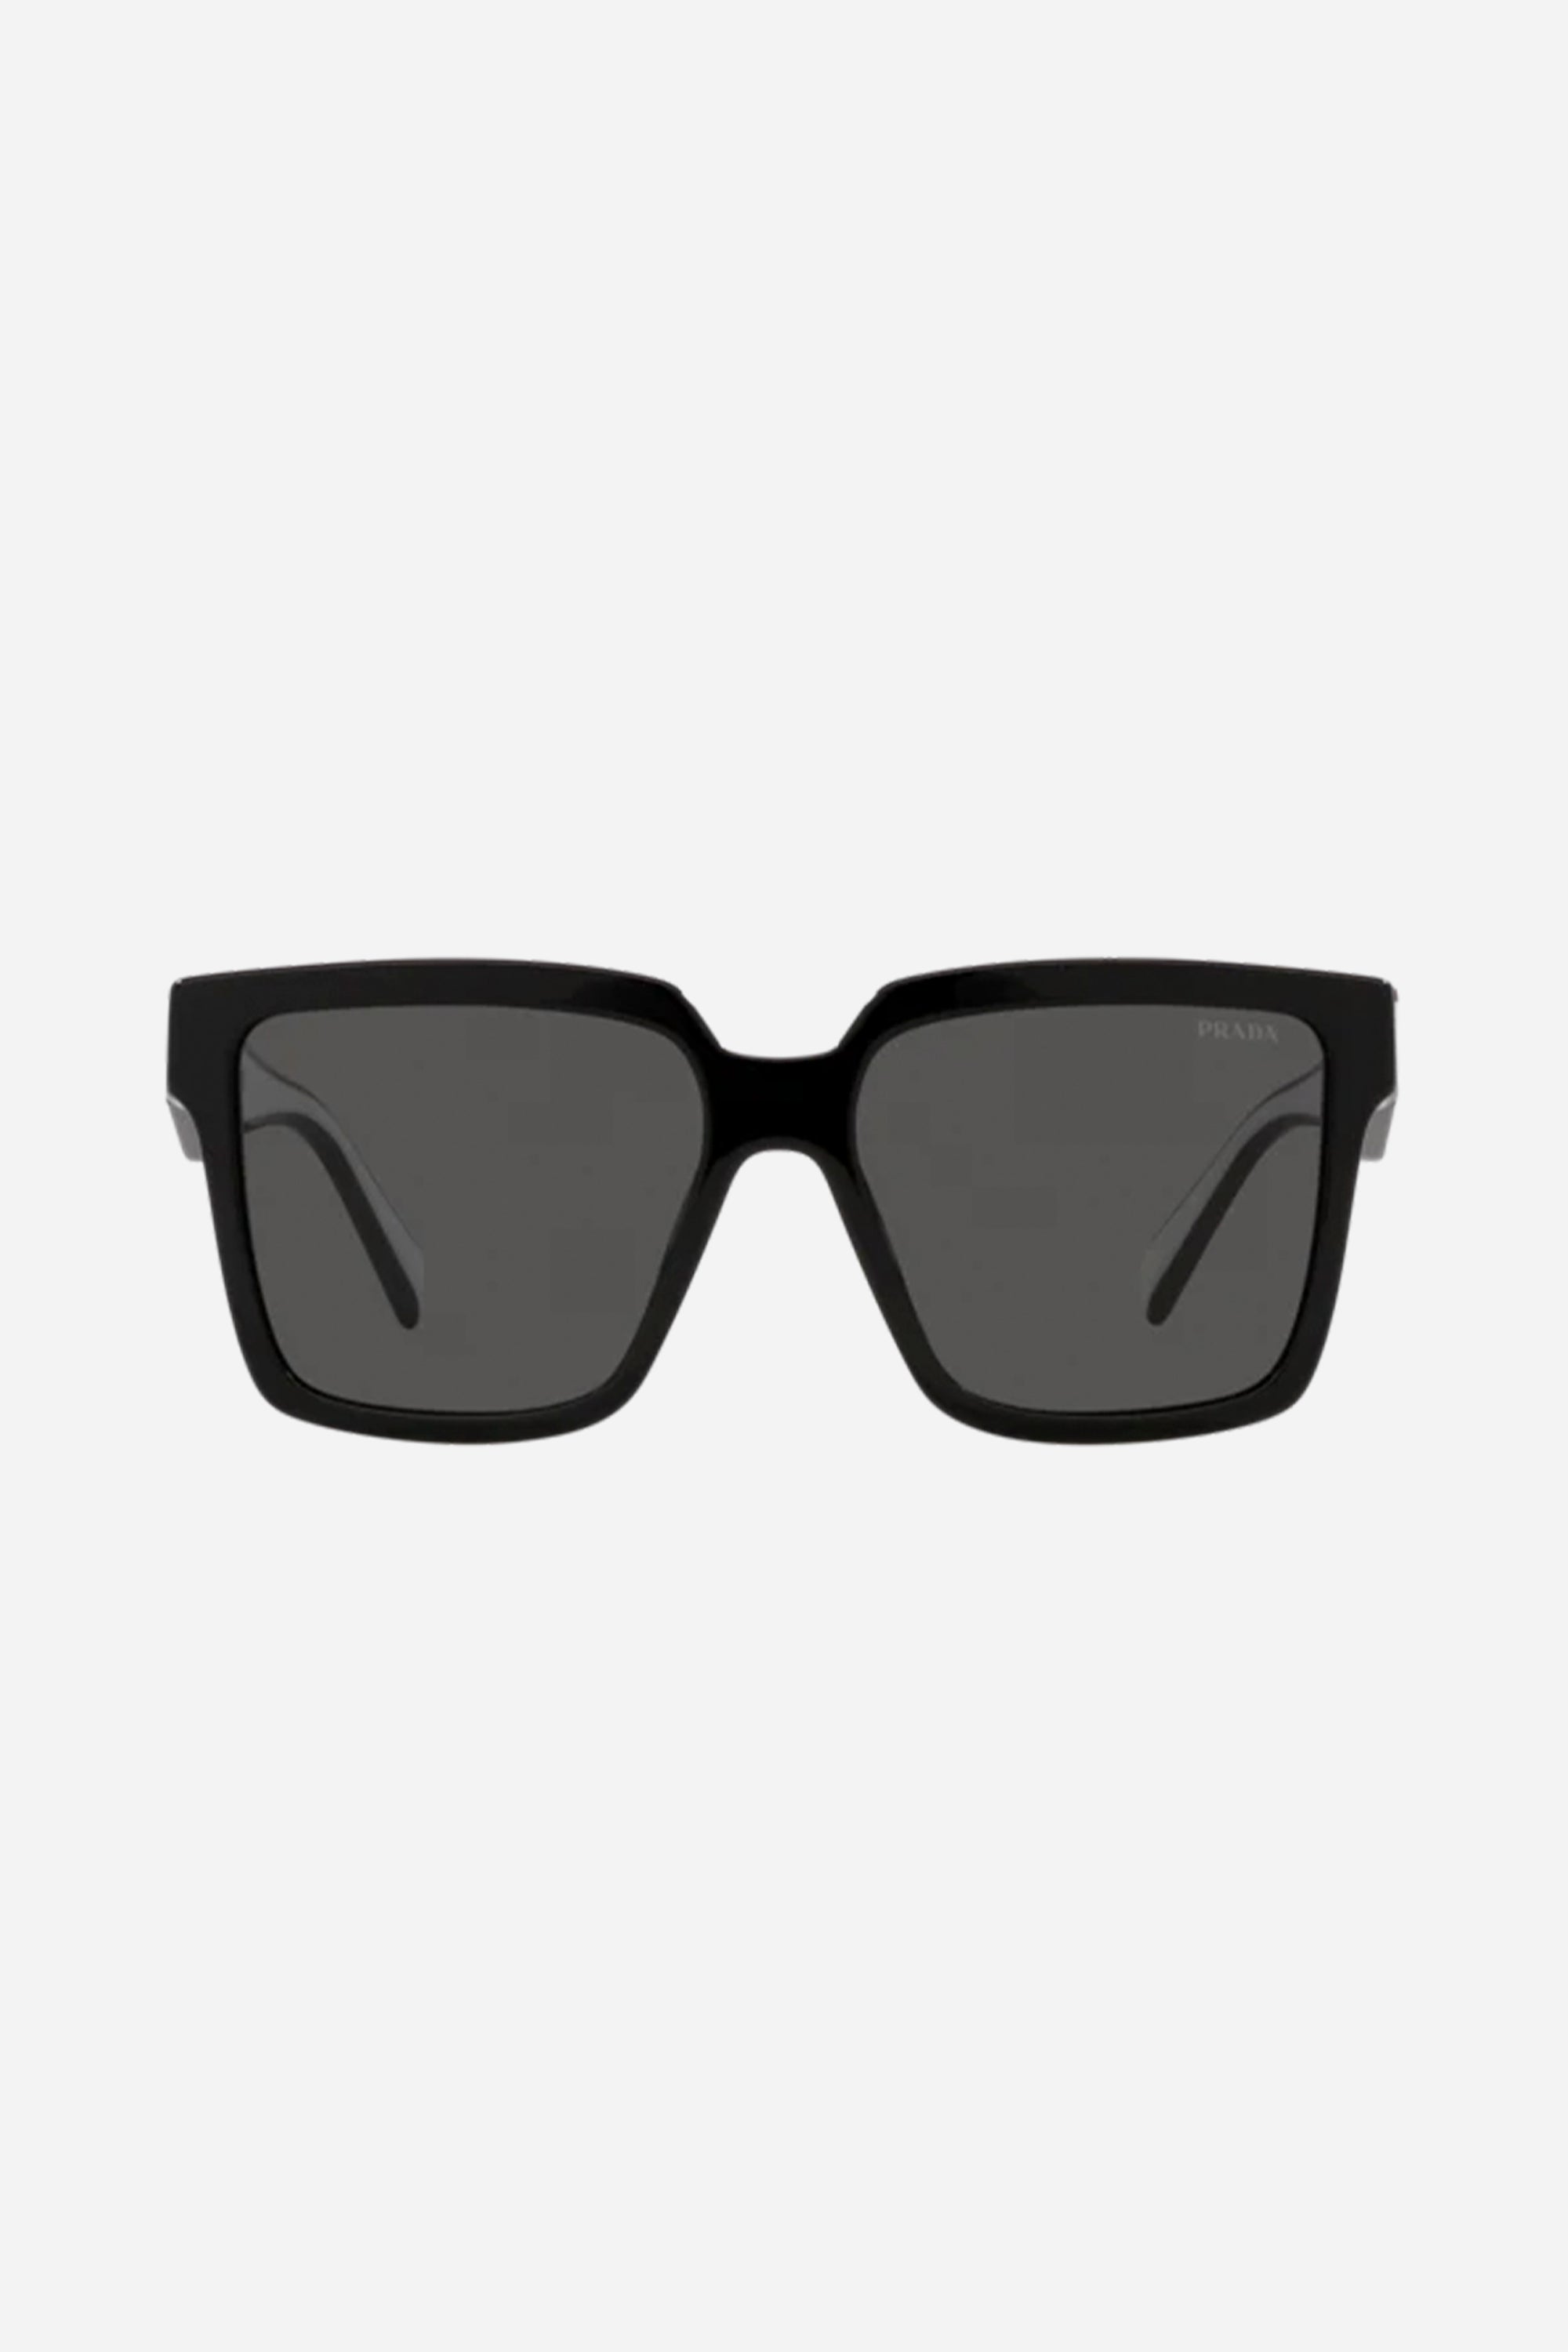 Prada over cat eye black and white sunglasses - Eyewear Club